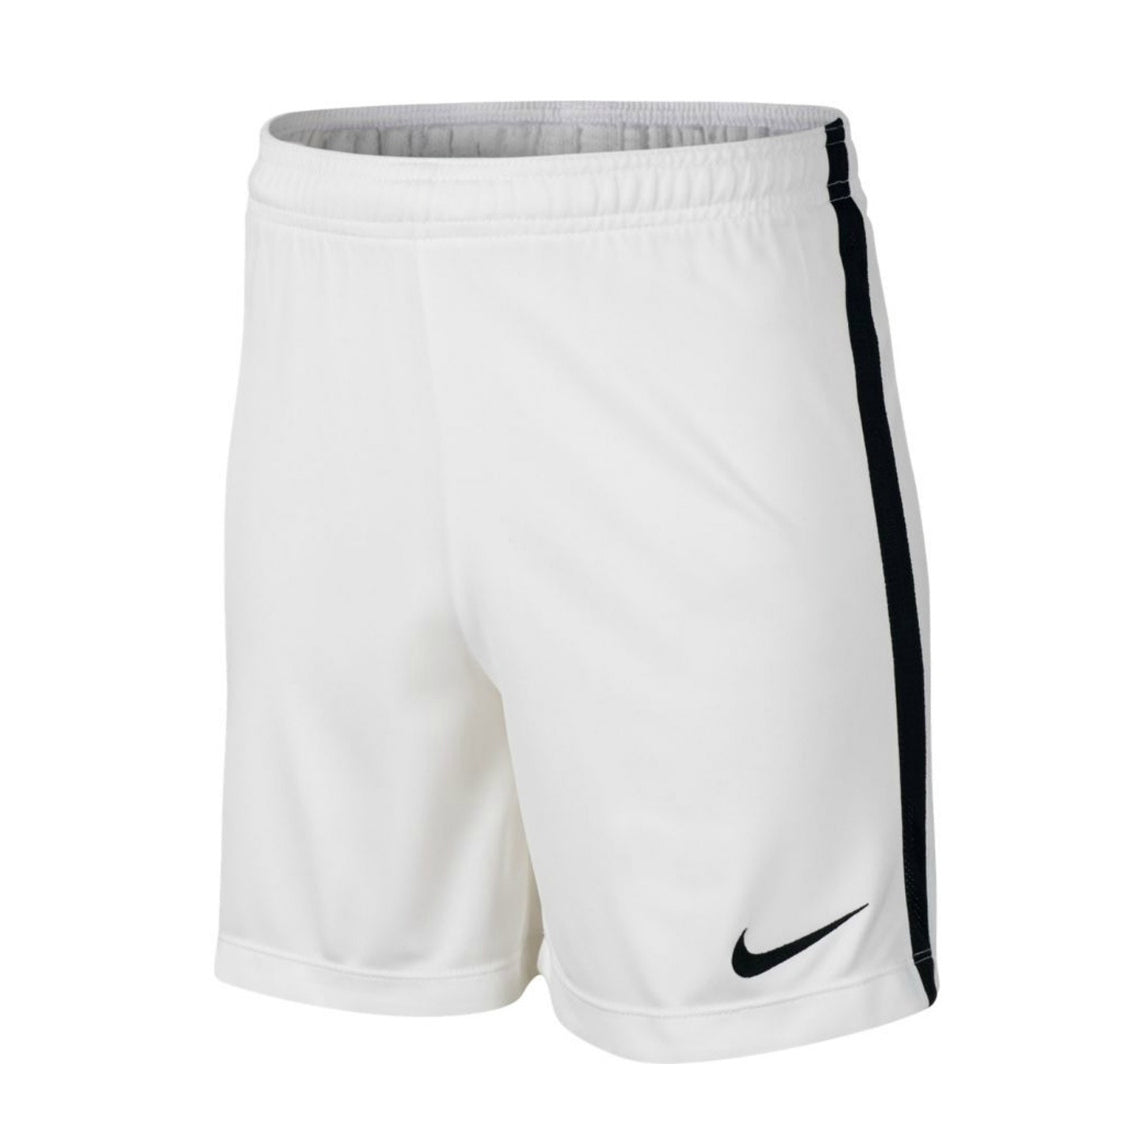 Nike Dry Academy Football Shorts